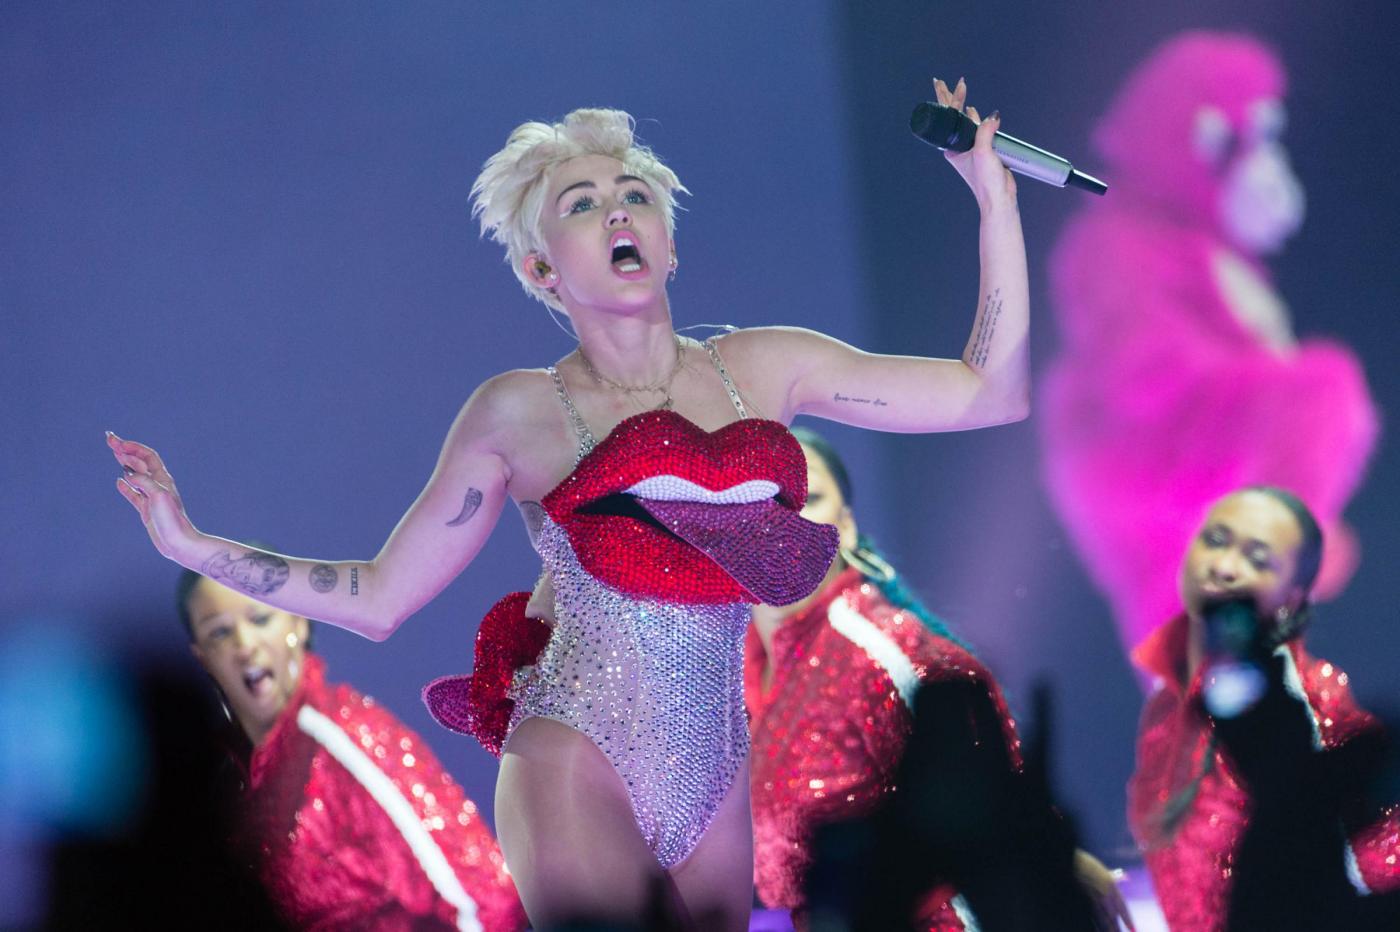 Miley Cyrus sul palco a Londra: "Drogatevi","fumate erba", "datevi bacio gay"02